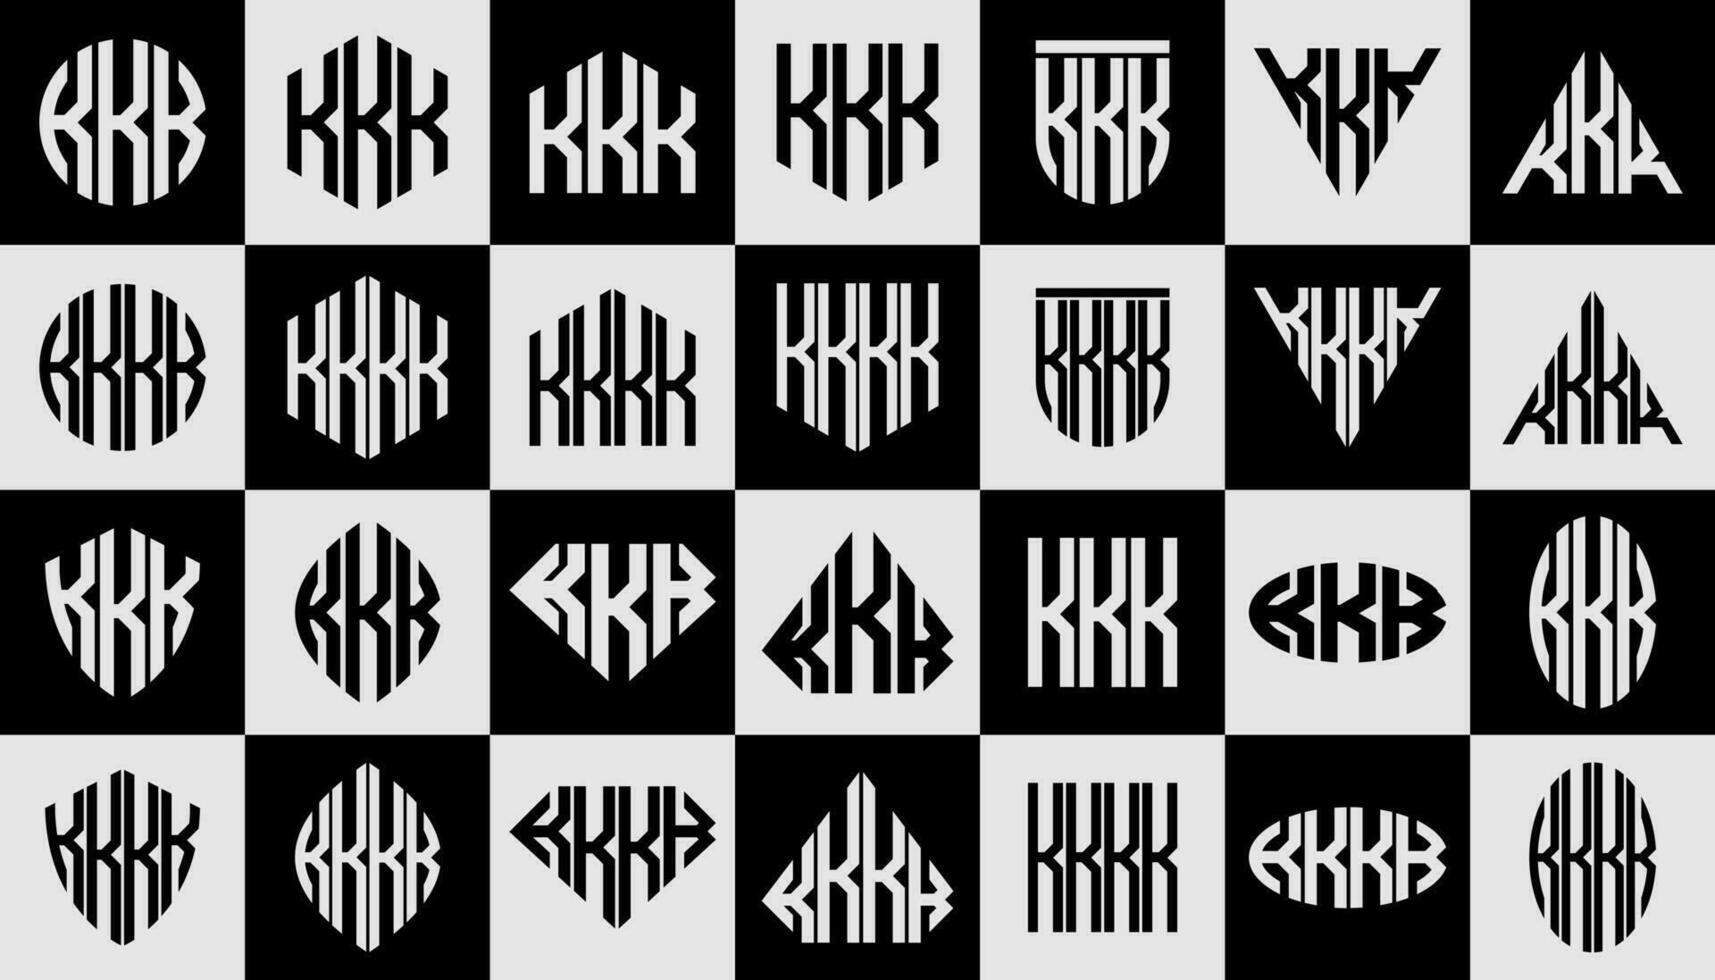 conjunto de geométrico línea forma letra k kkk kkkk logo diseño vector